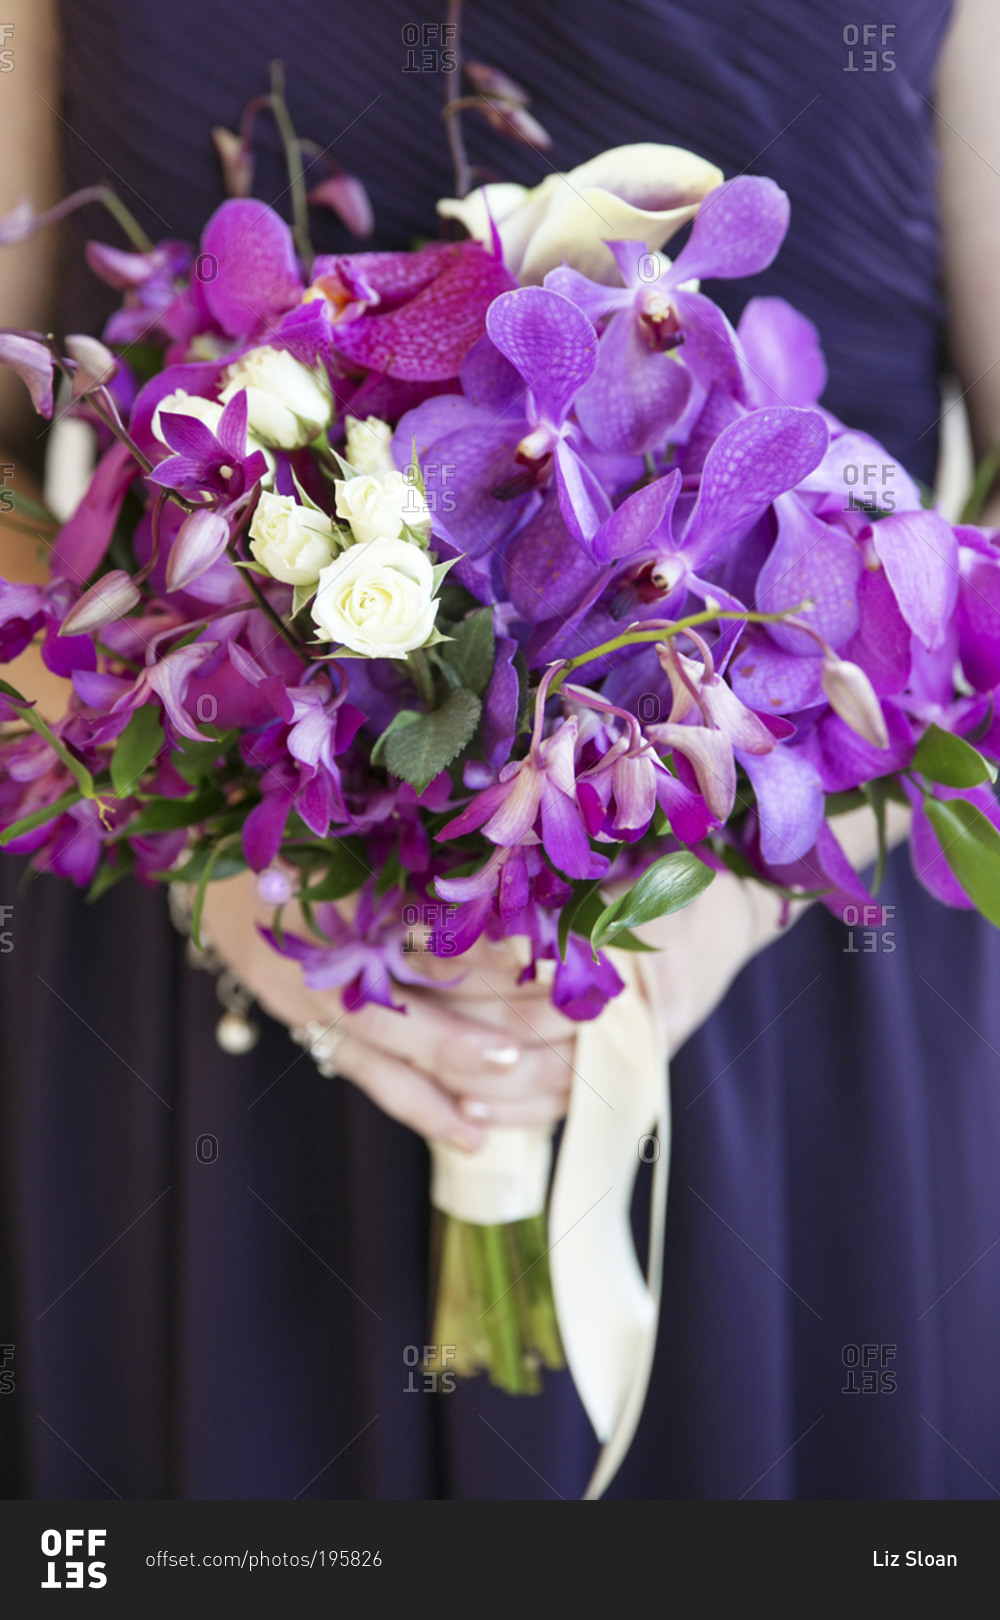 A bridesmaid's bouquet of purple flowers